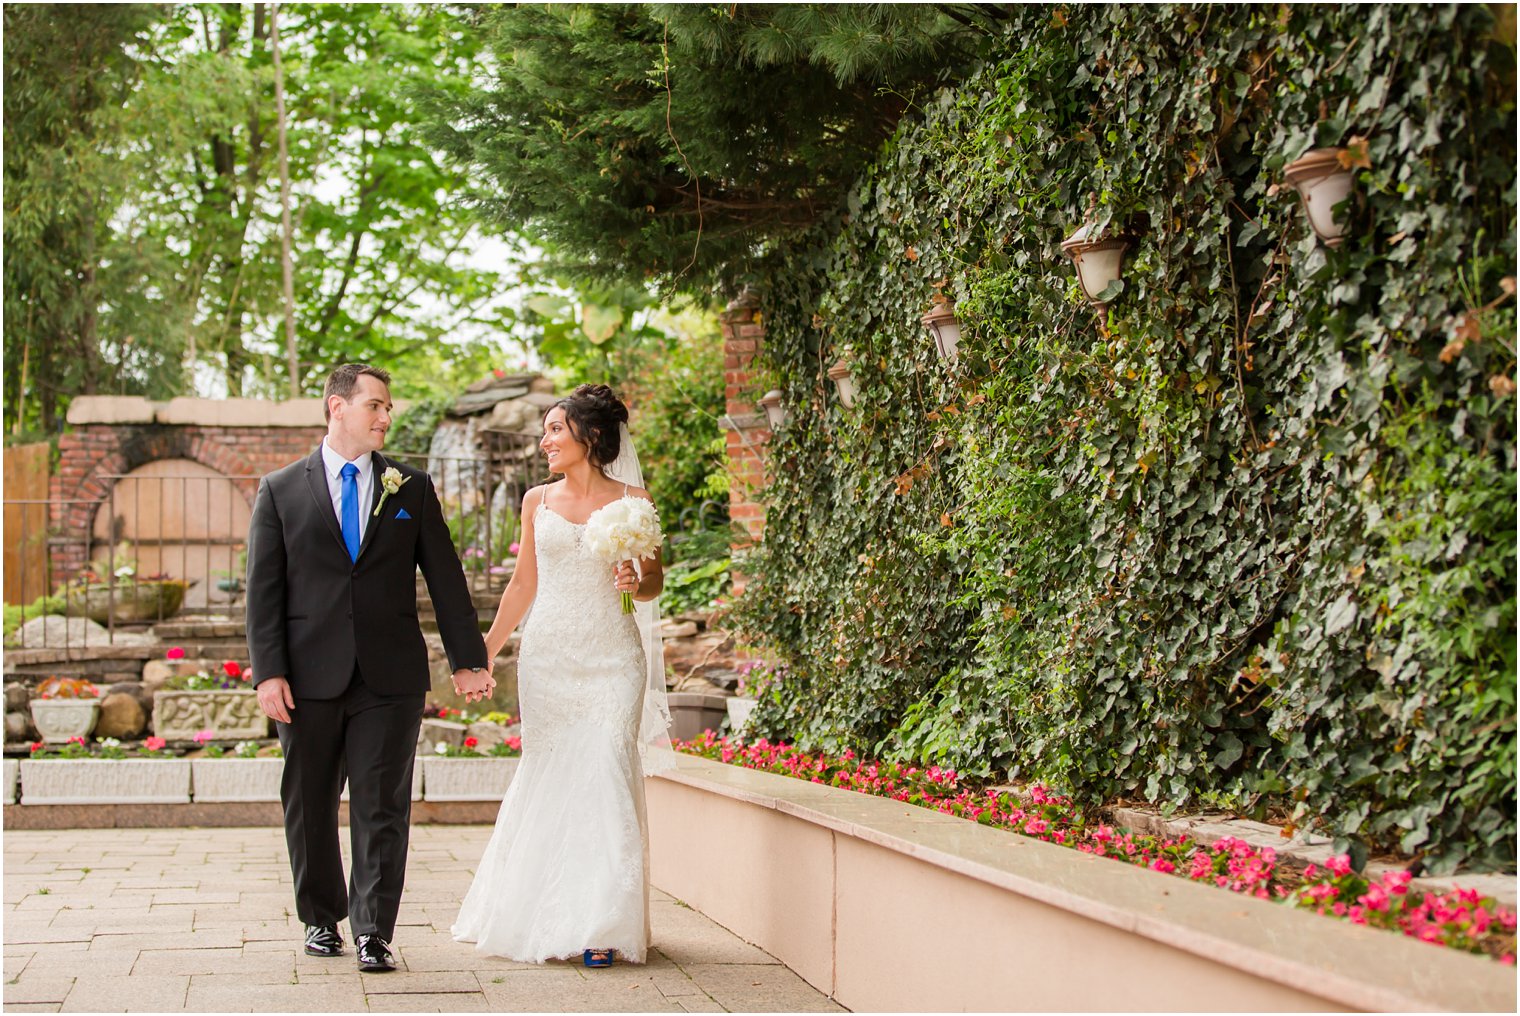 Bride and groom walking through garden